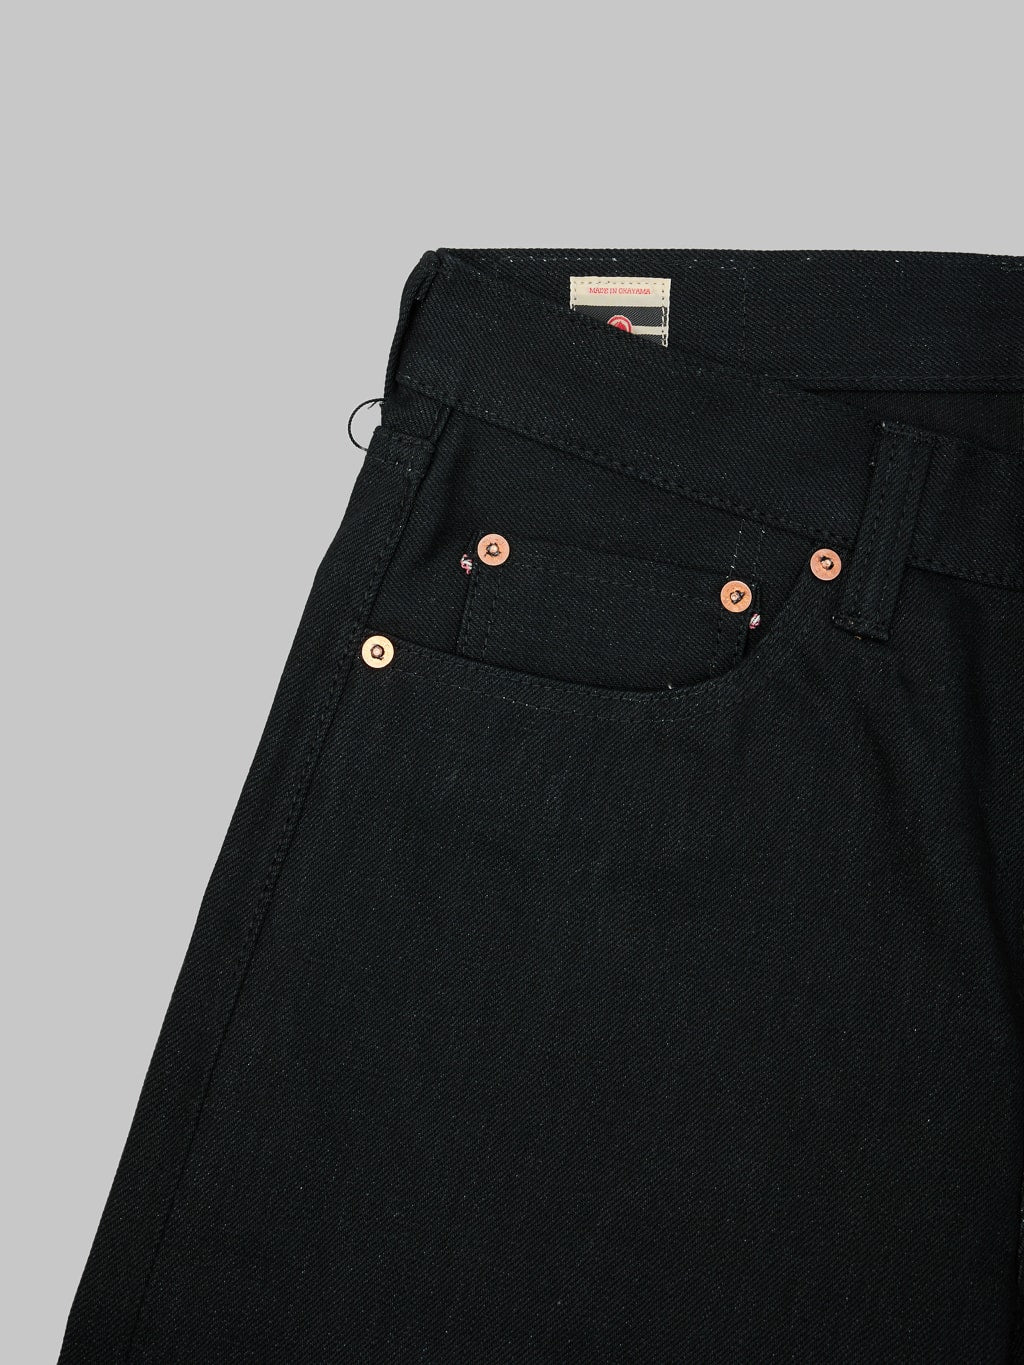 Momotaro 0306B Black x Black Tight Tapered Jeans coin pocket